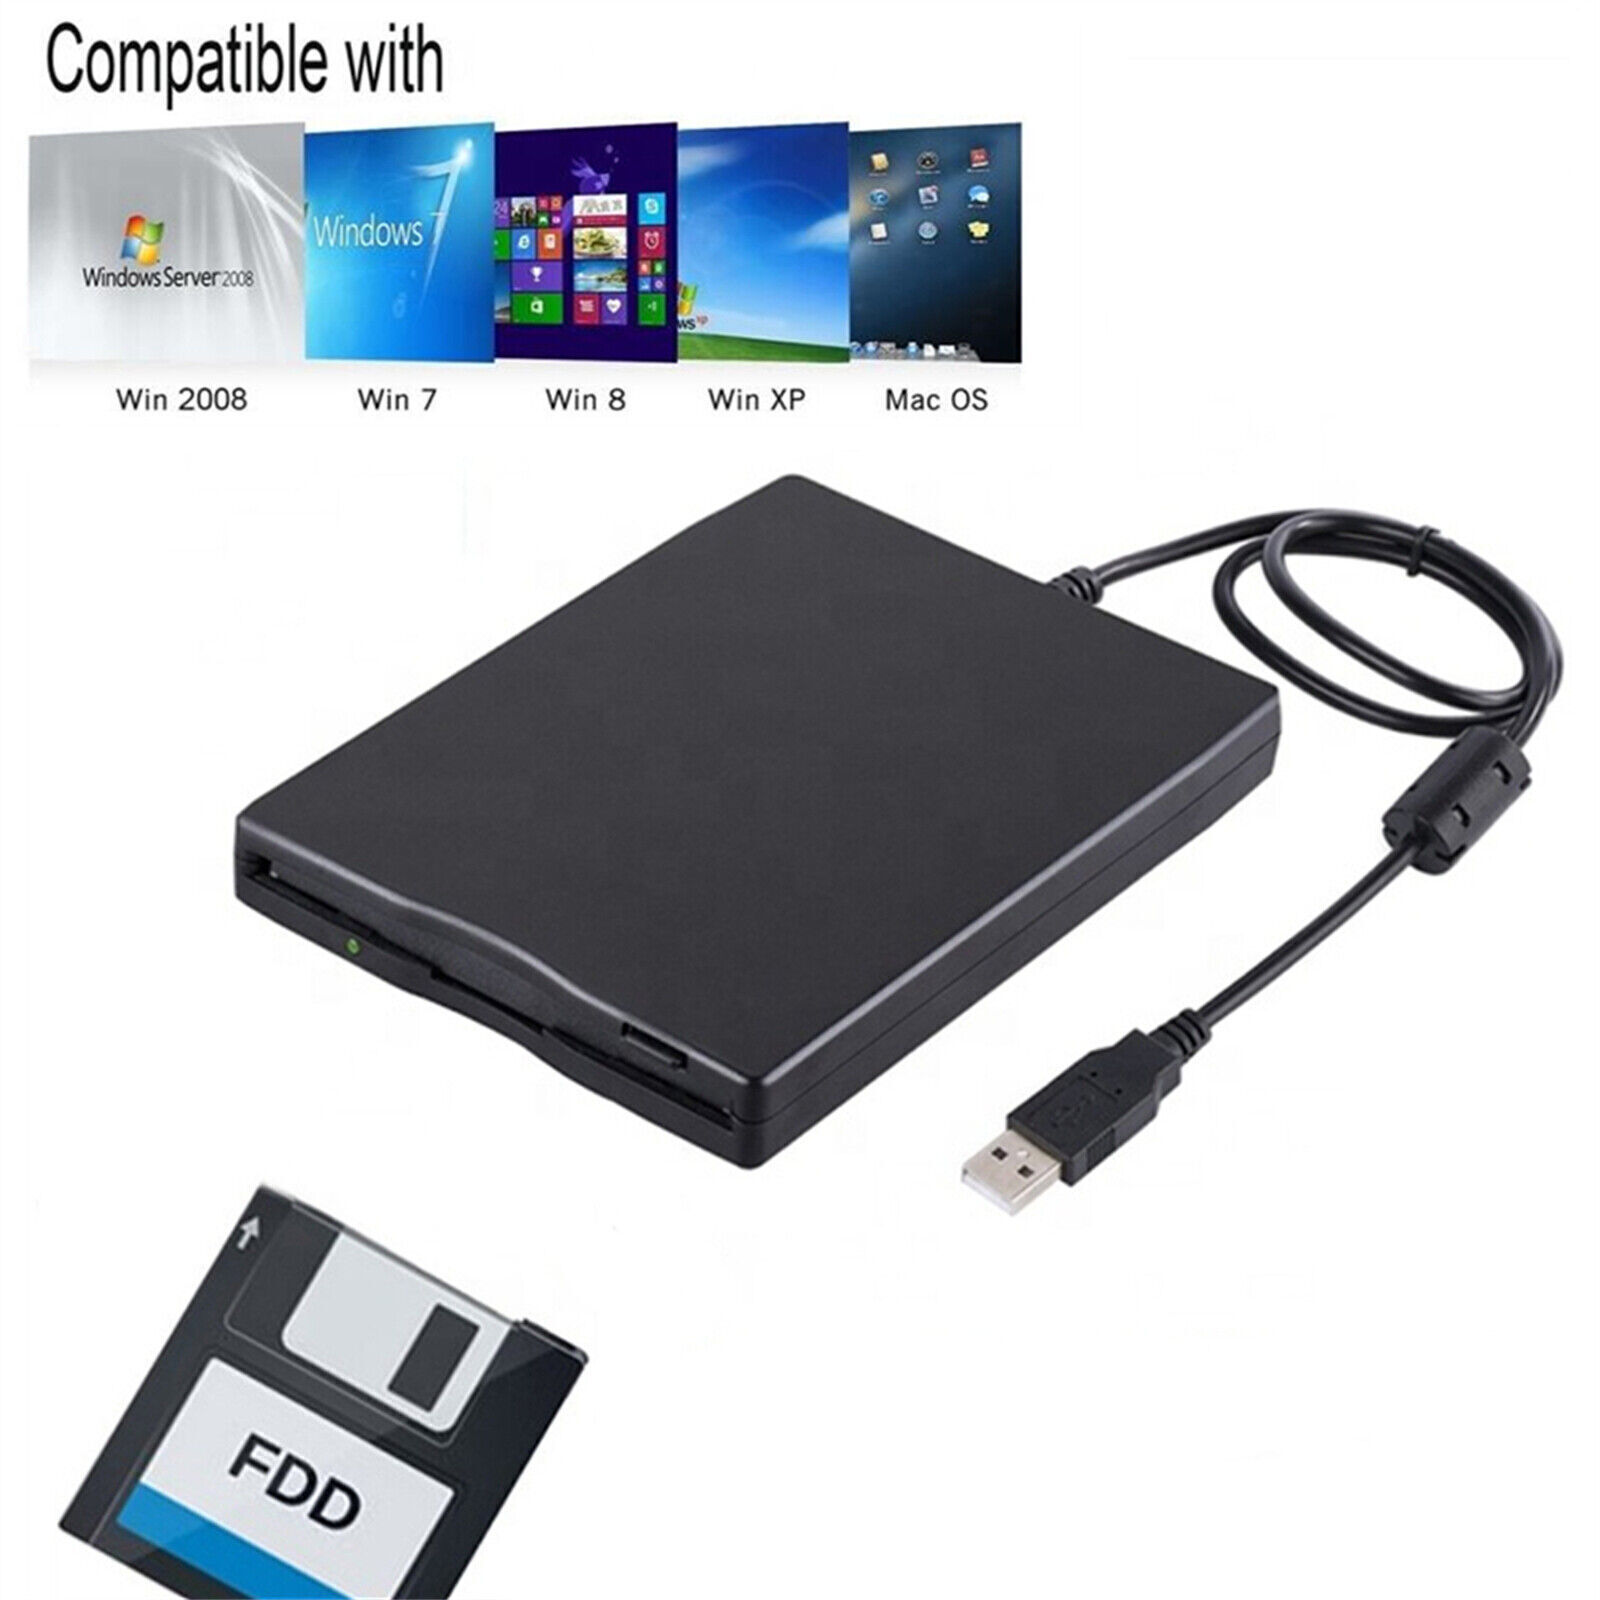 USB 2.0 External 3.5” Floppy Disk Drive 1.44MB FDD Data Reader For Mac Laptop PC